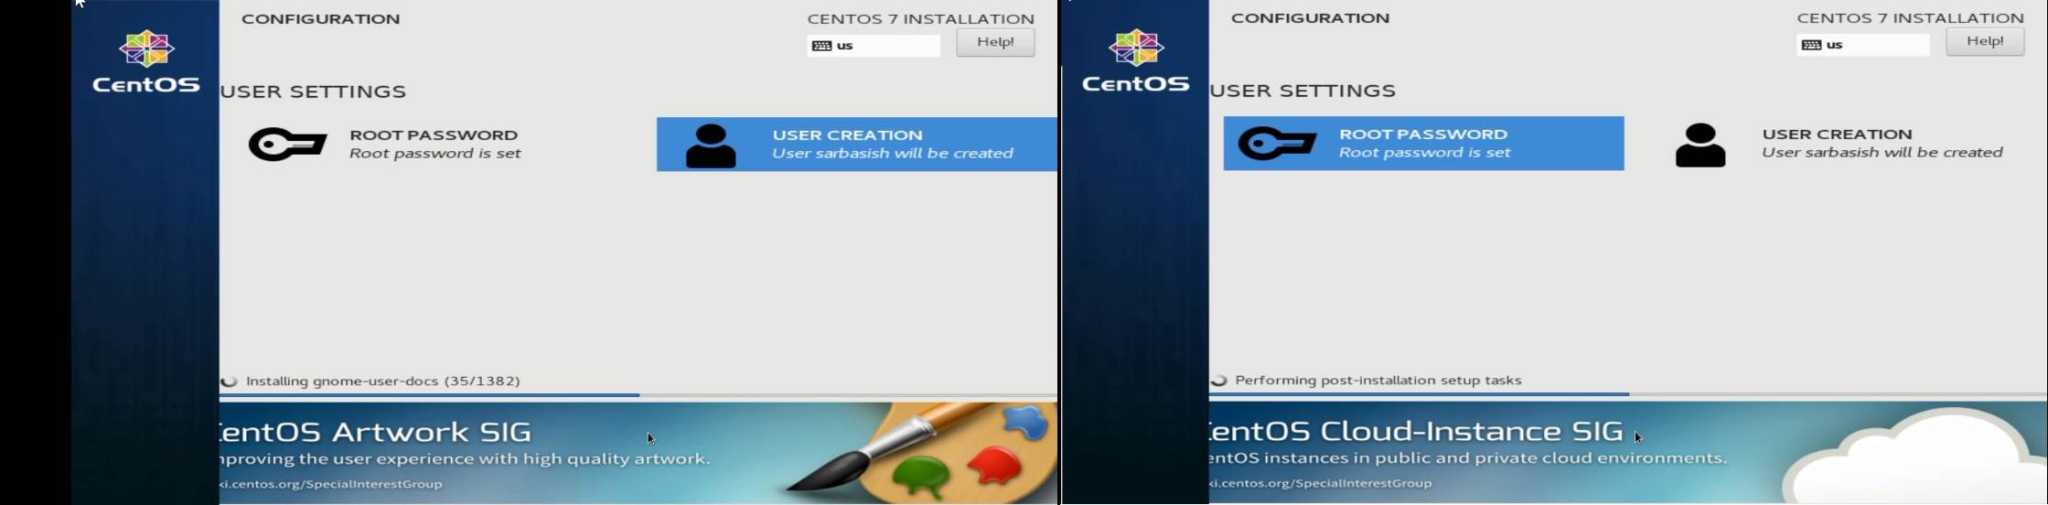 CentOS 7 Installation 13 14